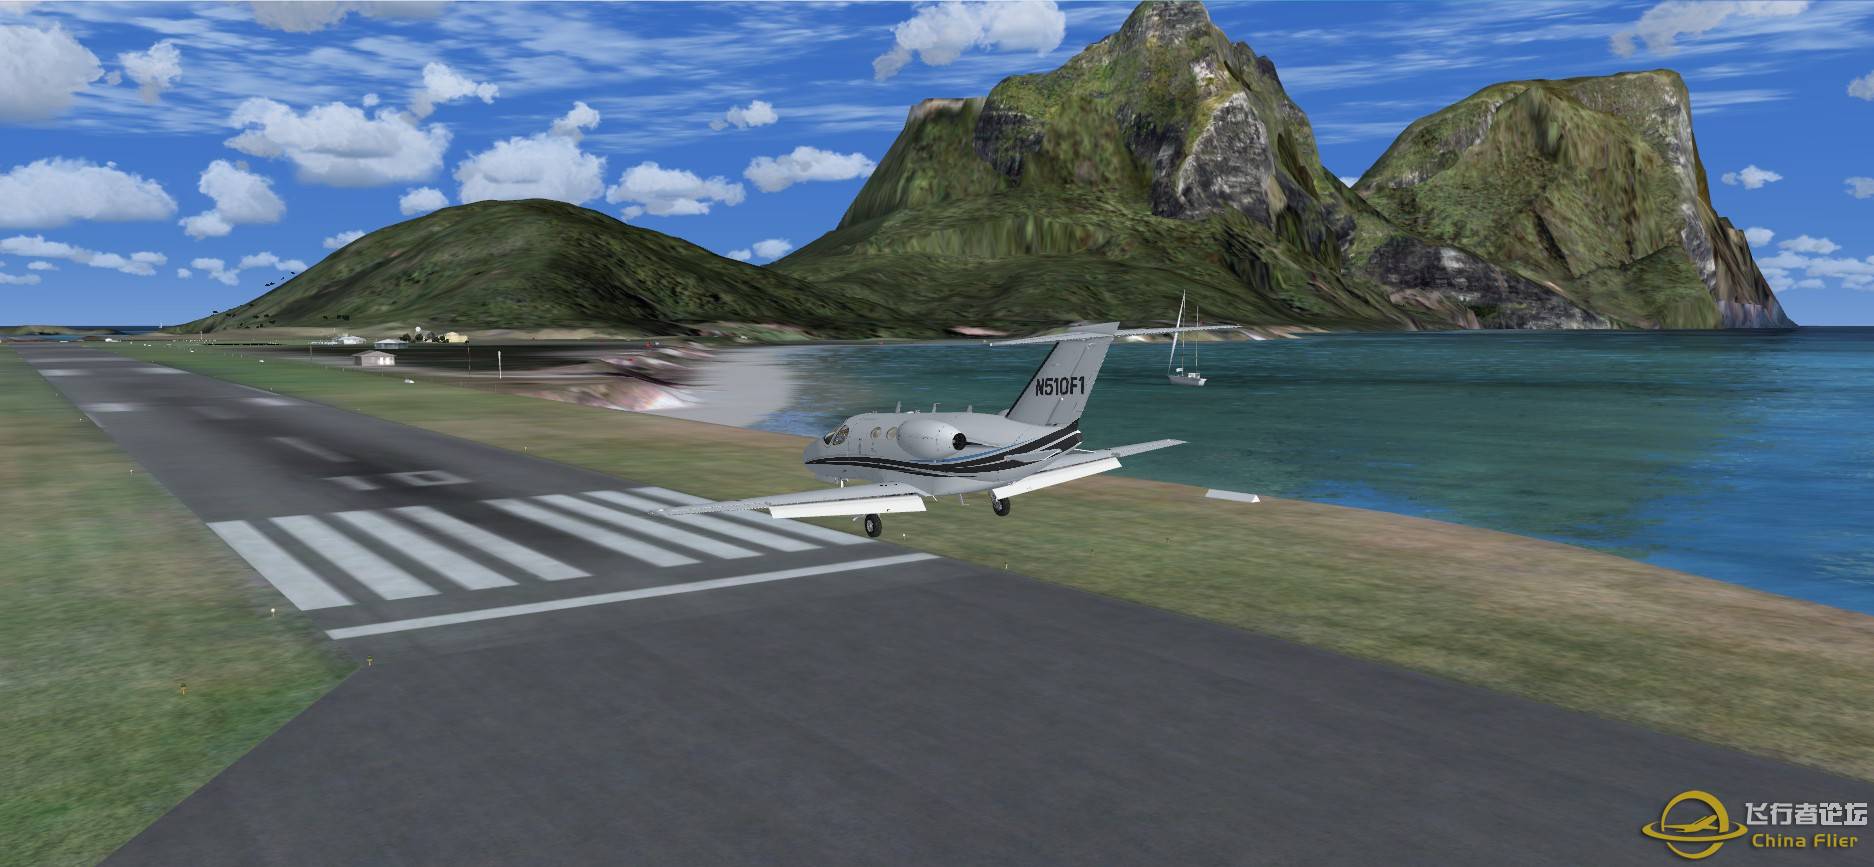 Aerosoft Lord Howe Island 紧邻澳洲的小岛-3152 